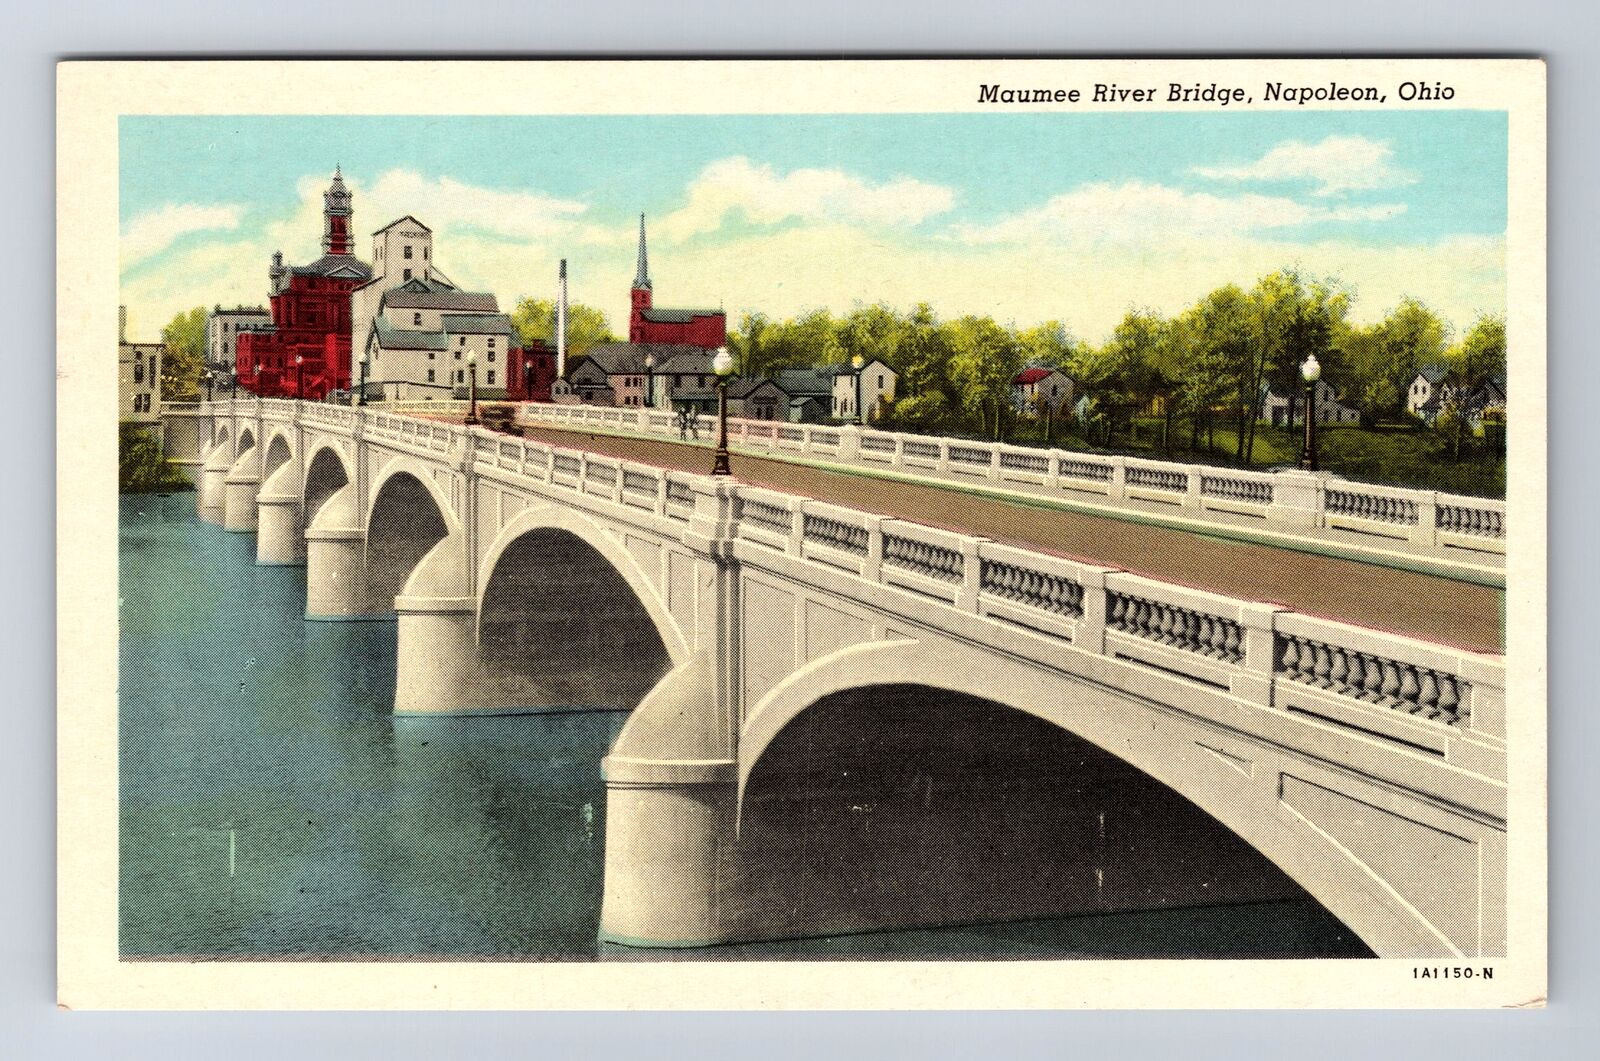 Napoleon OH-Ohio, Maumee River Bridge, Antique Souvenir Vintage Postcard